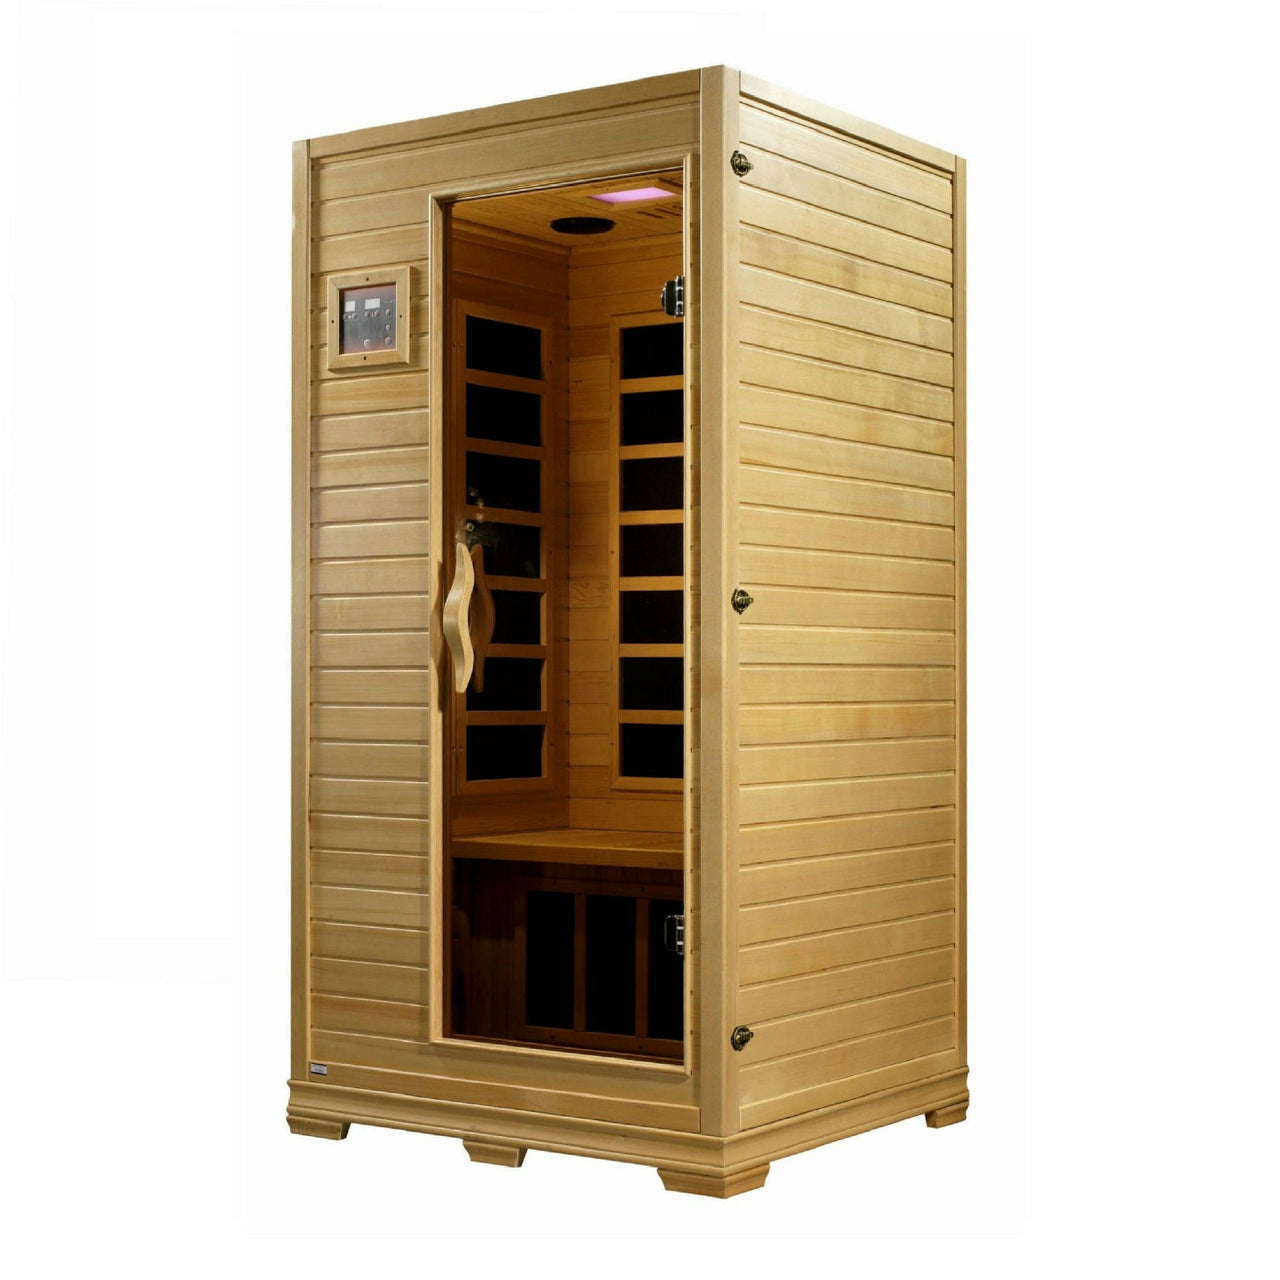 Golden Designs Sauna: "Studio Elite" 1-2 Person PureTech Near Zero Far Infrared Sauna - Canadian Hemlock - GDI-6109-01 Elite - Fire Pit Stock